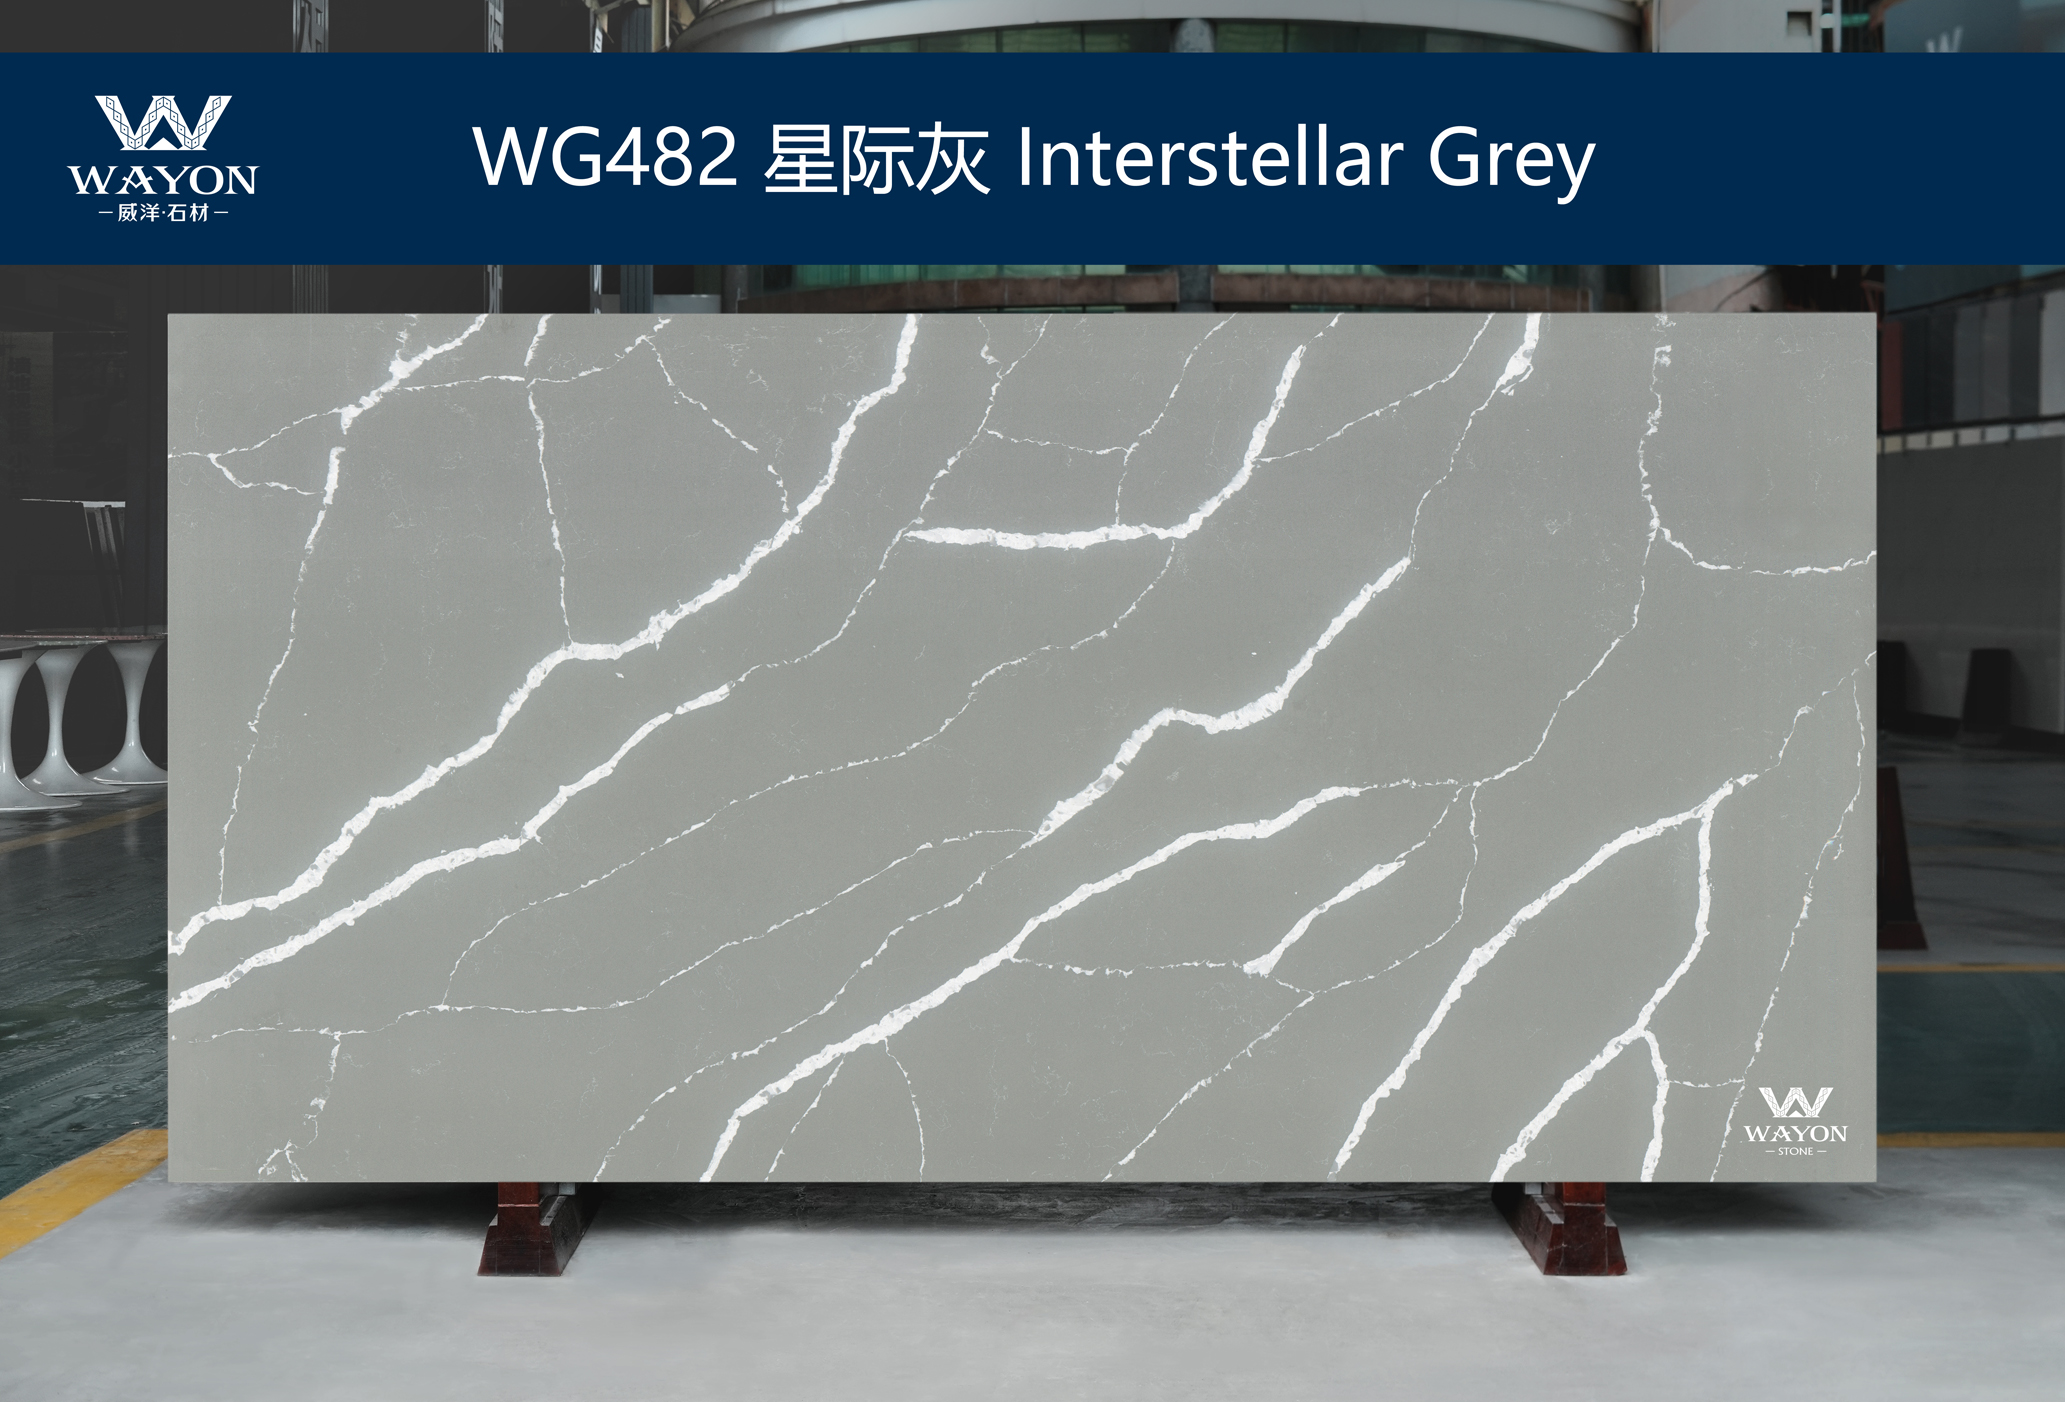 WG482 Interstellar Grey